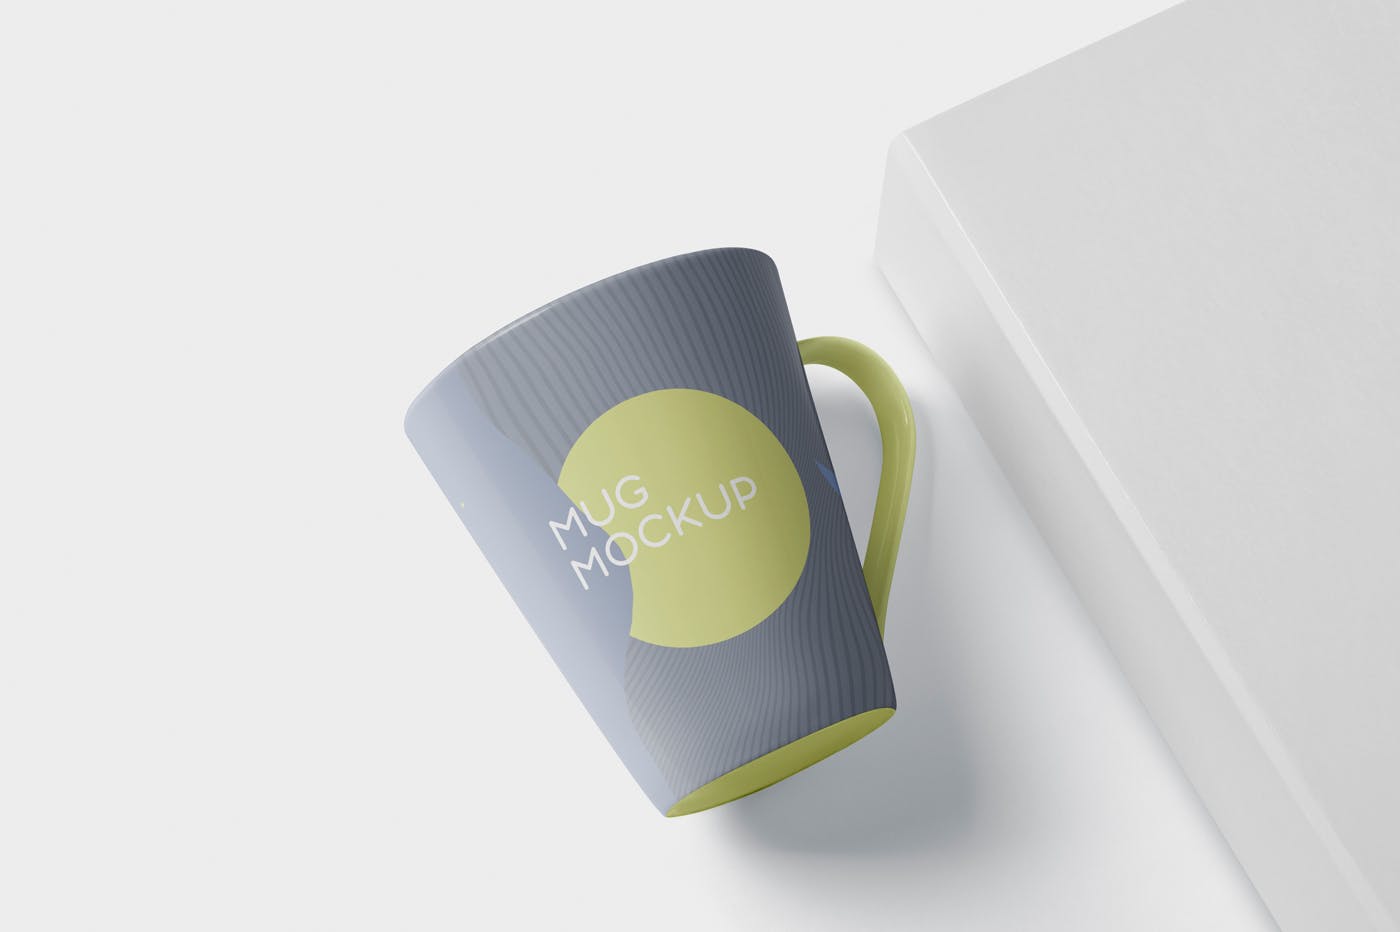 锥形马克杯图案设计第一素材精选 Mug Mockup – Cone Shaped插图(4)